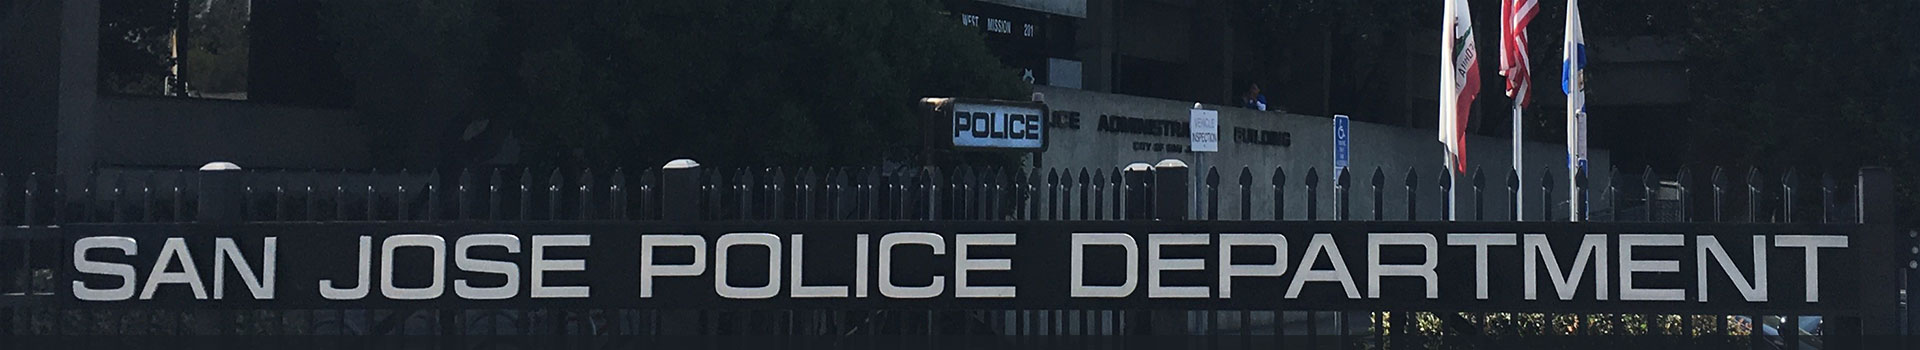 San Jose Police Department Banner